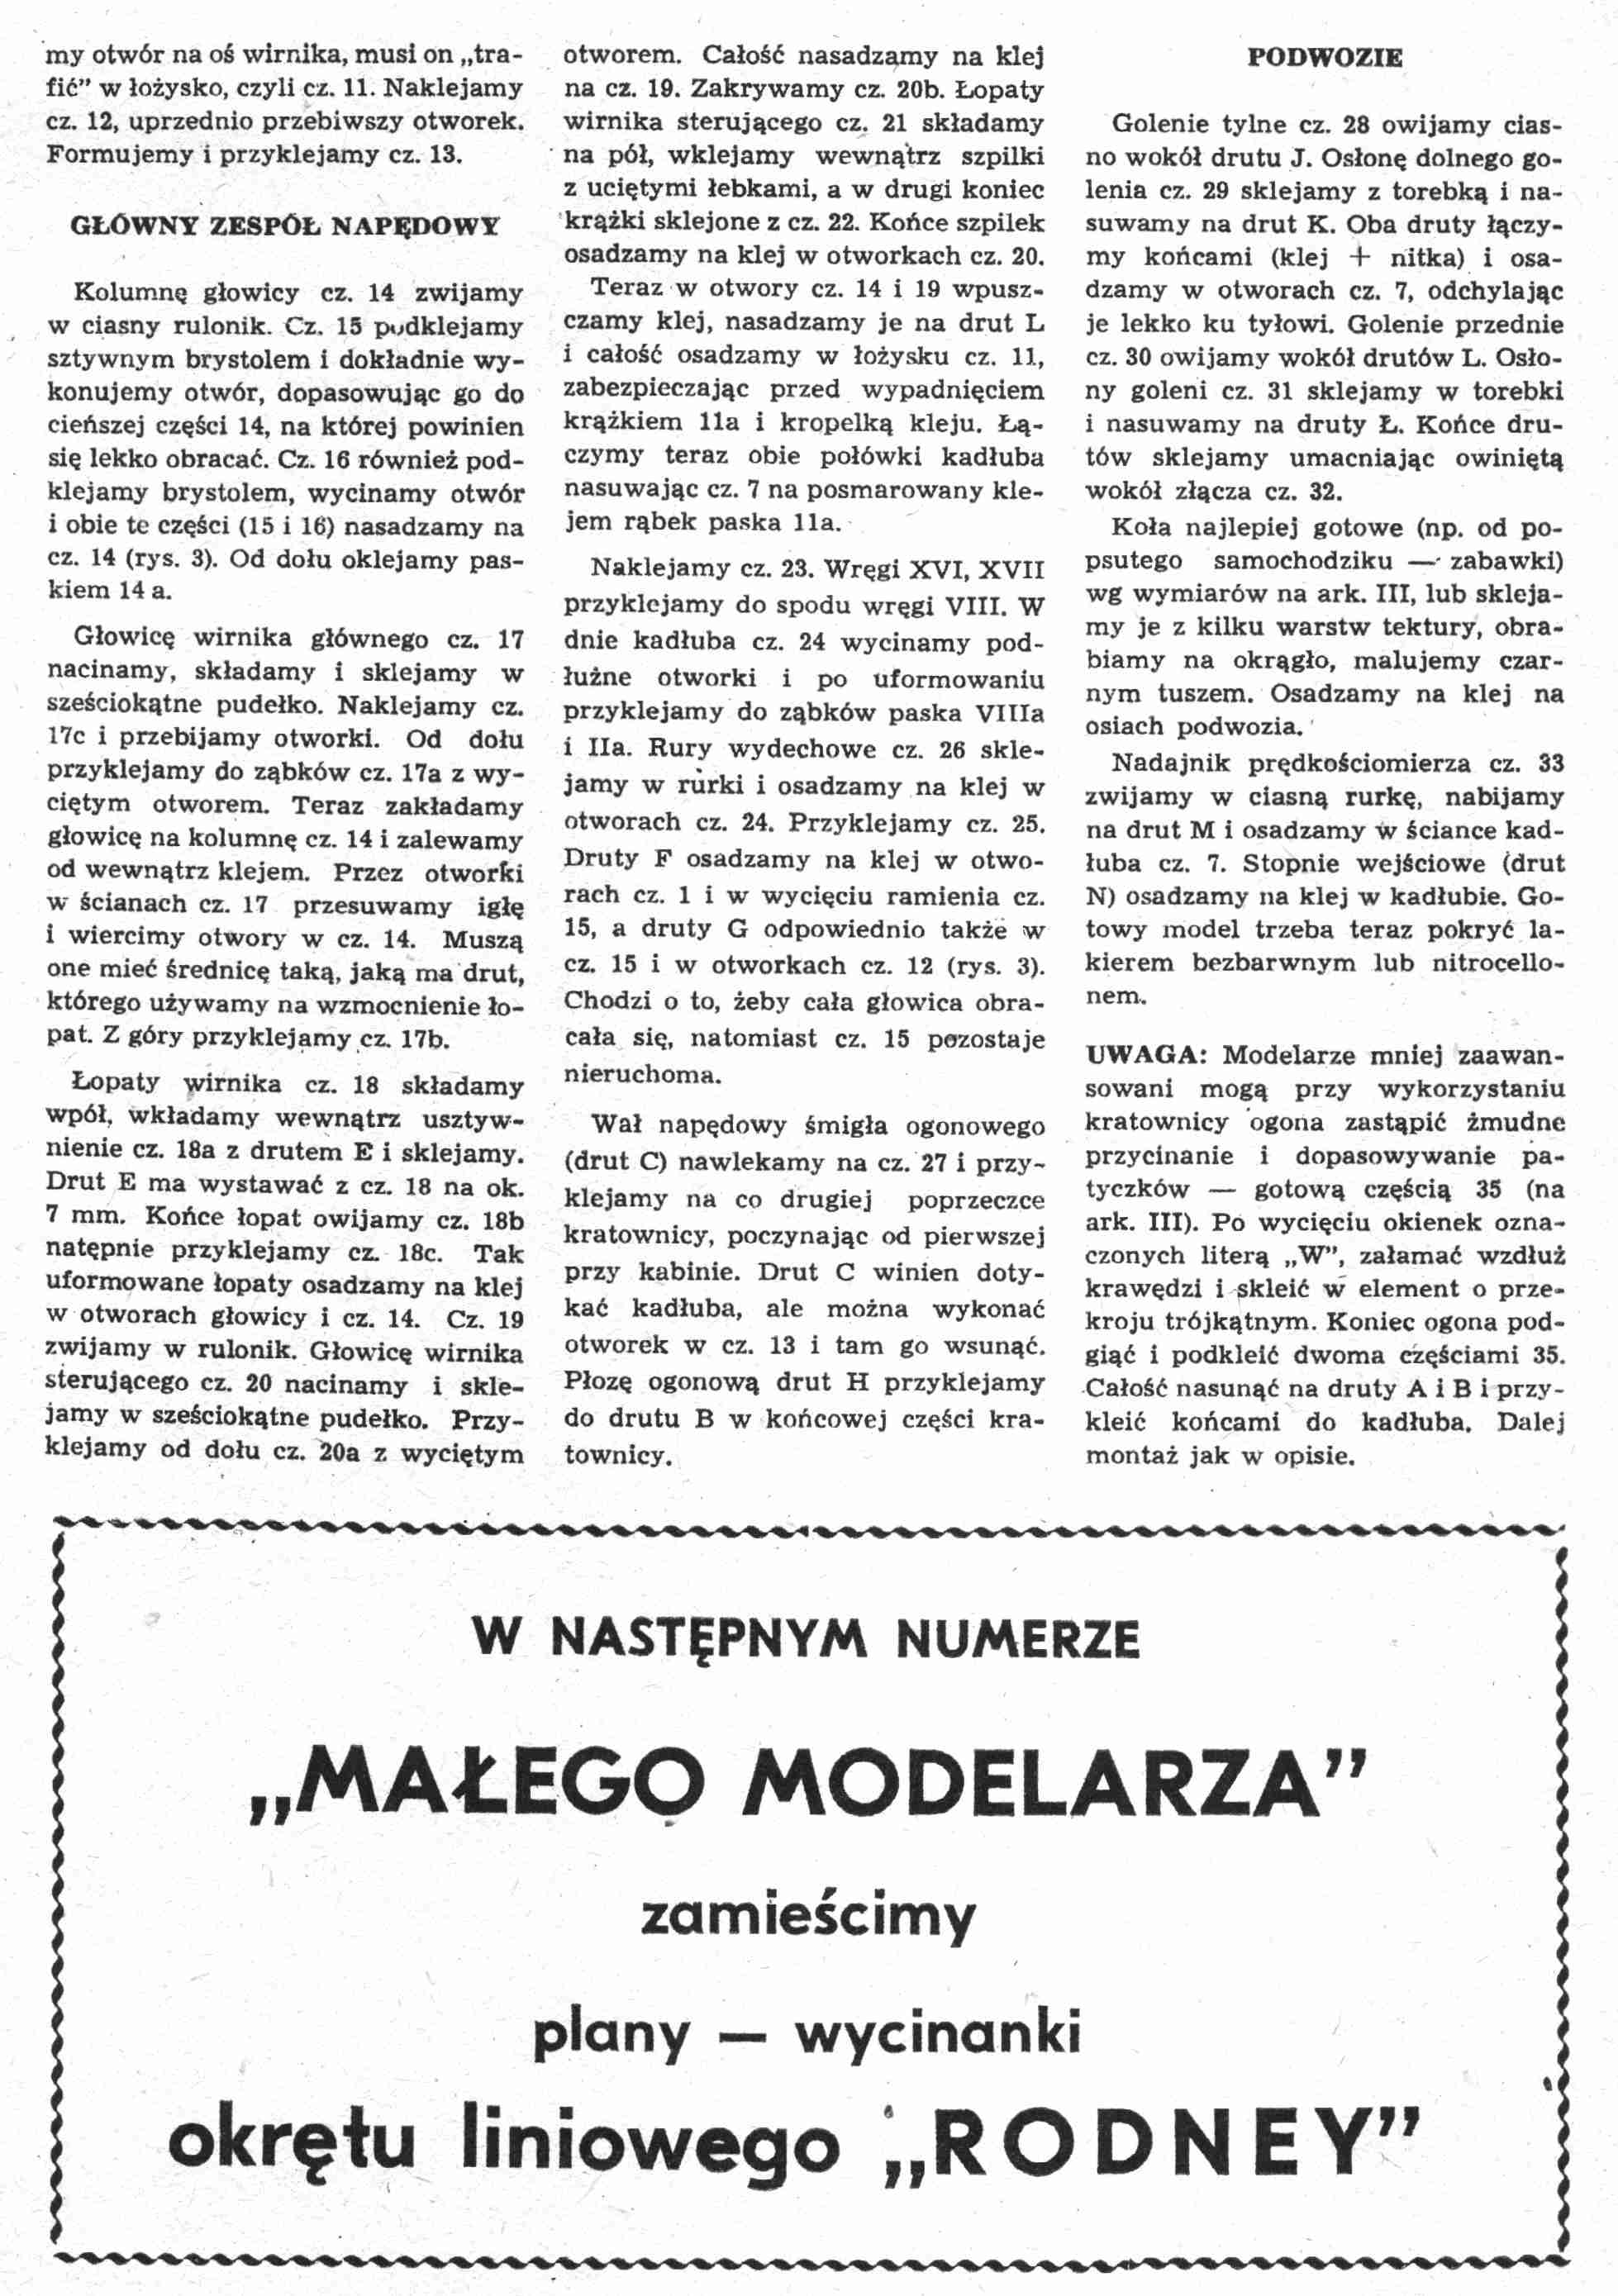 "Maly Modelarz" 12, 1975, 6 с.